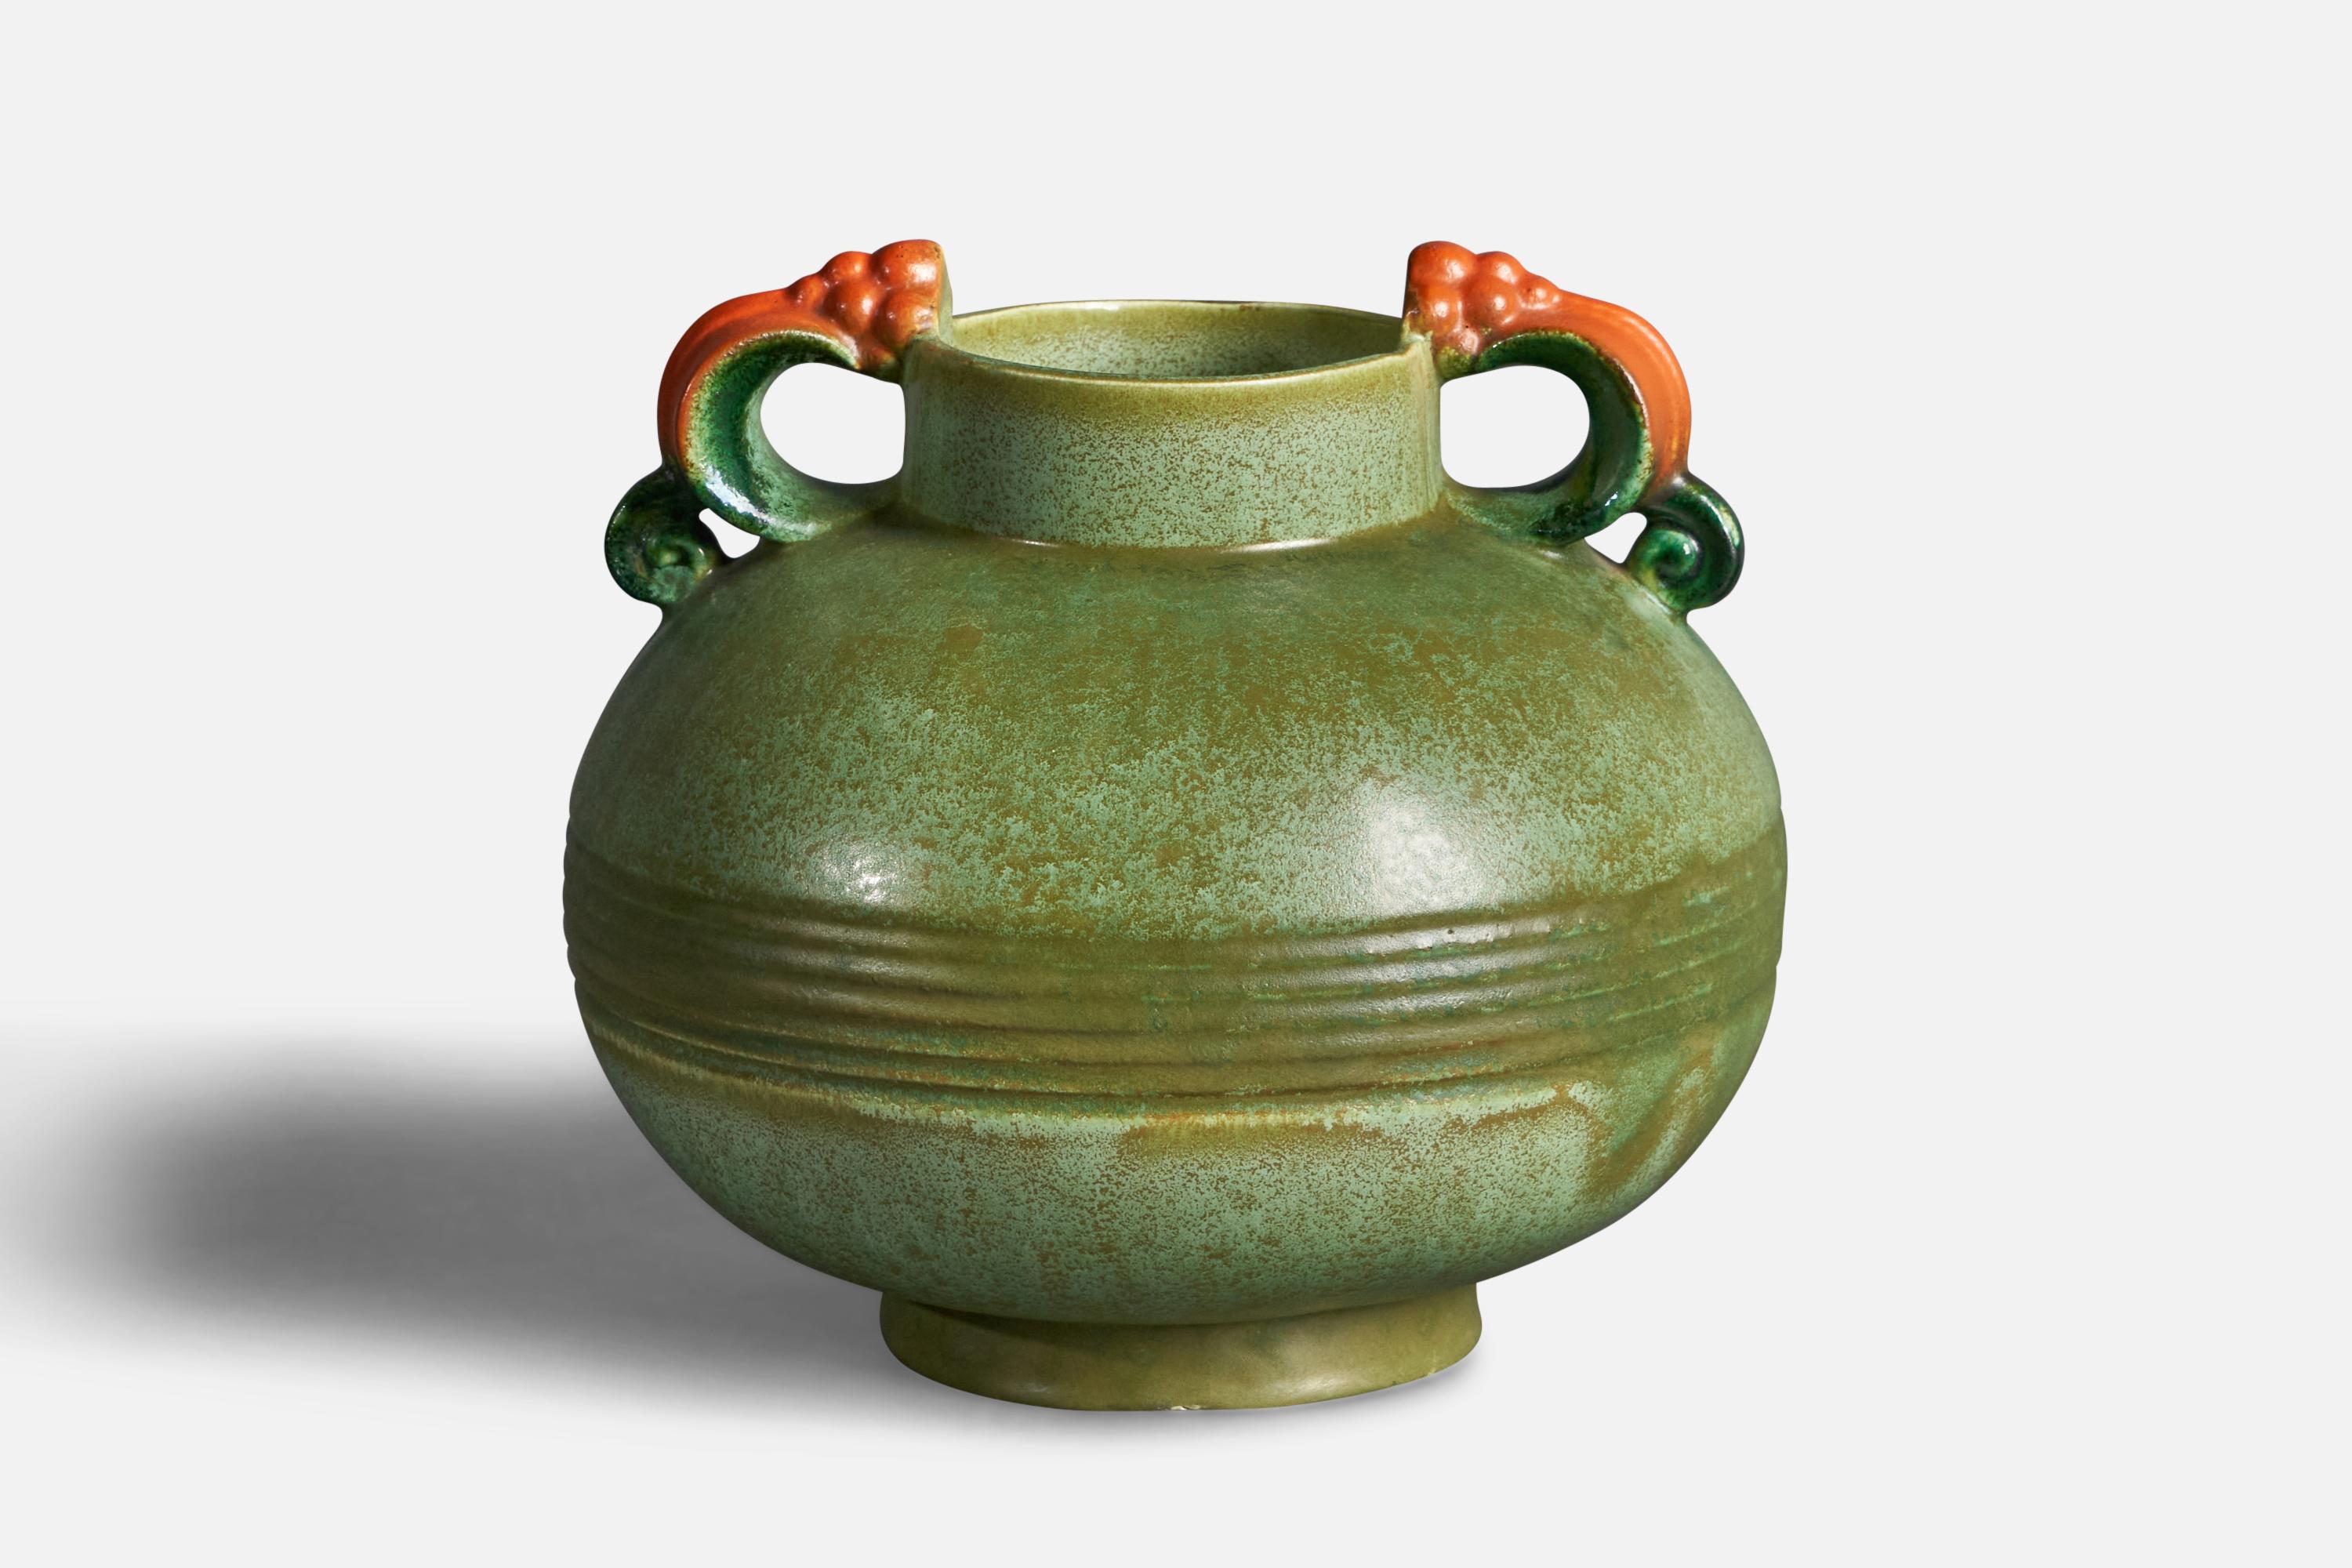 A green and orange-glazed earthenware vase designed and produced in Sweden, c. 1930s.